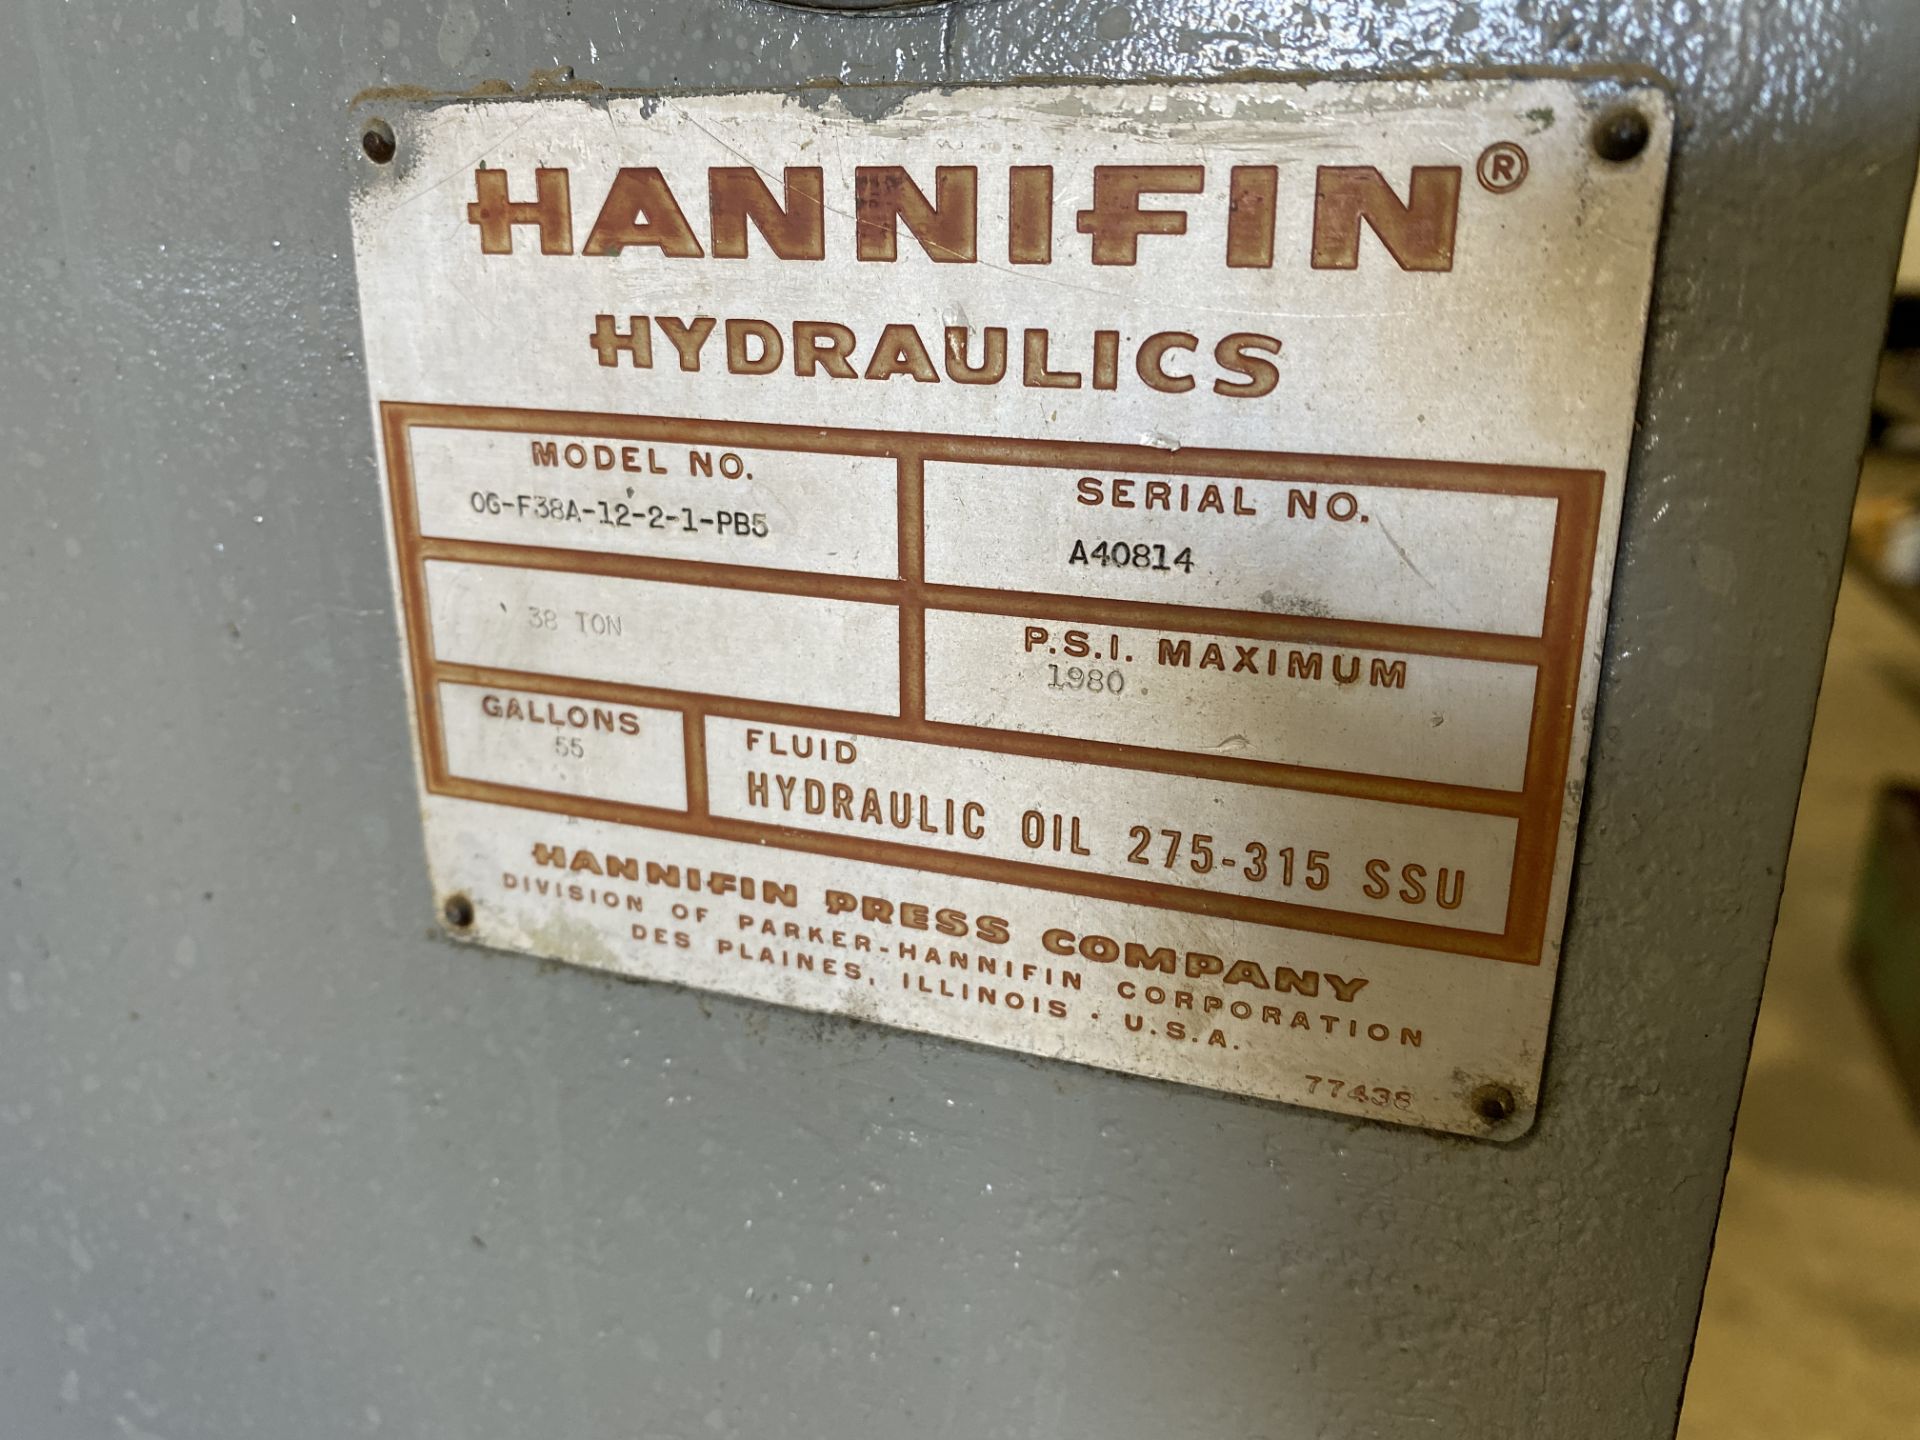 Hannifin 38 Ton Hydraulic Press - Image 8 of 8